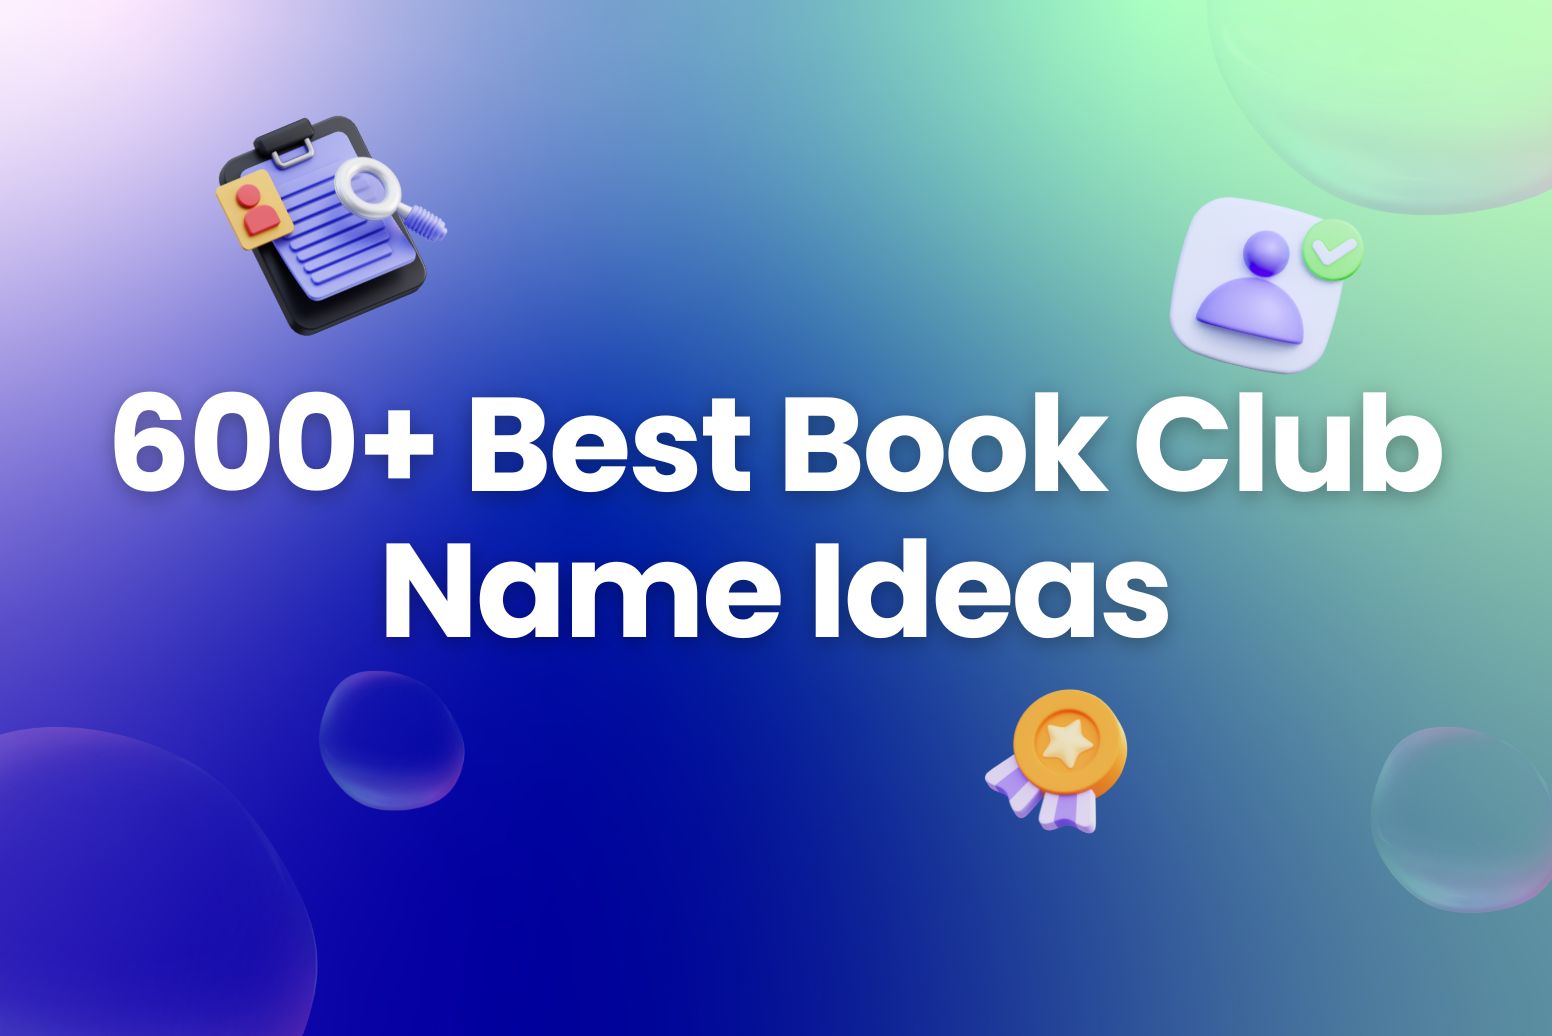 600+ Best Book Club Name Ideas